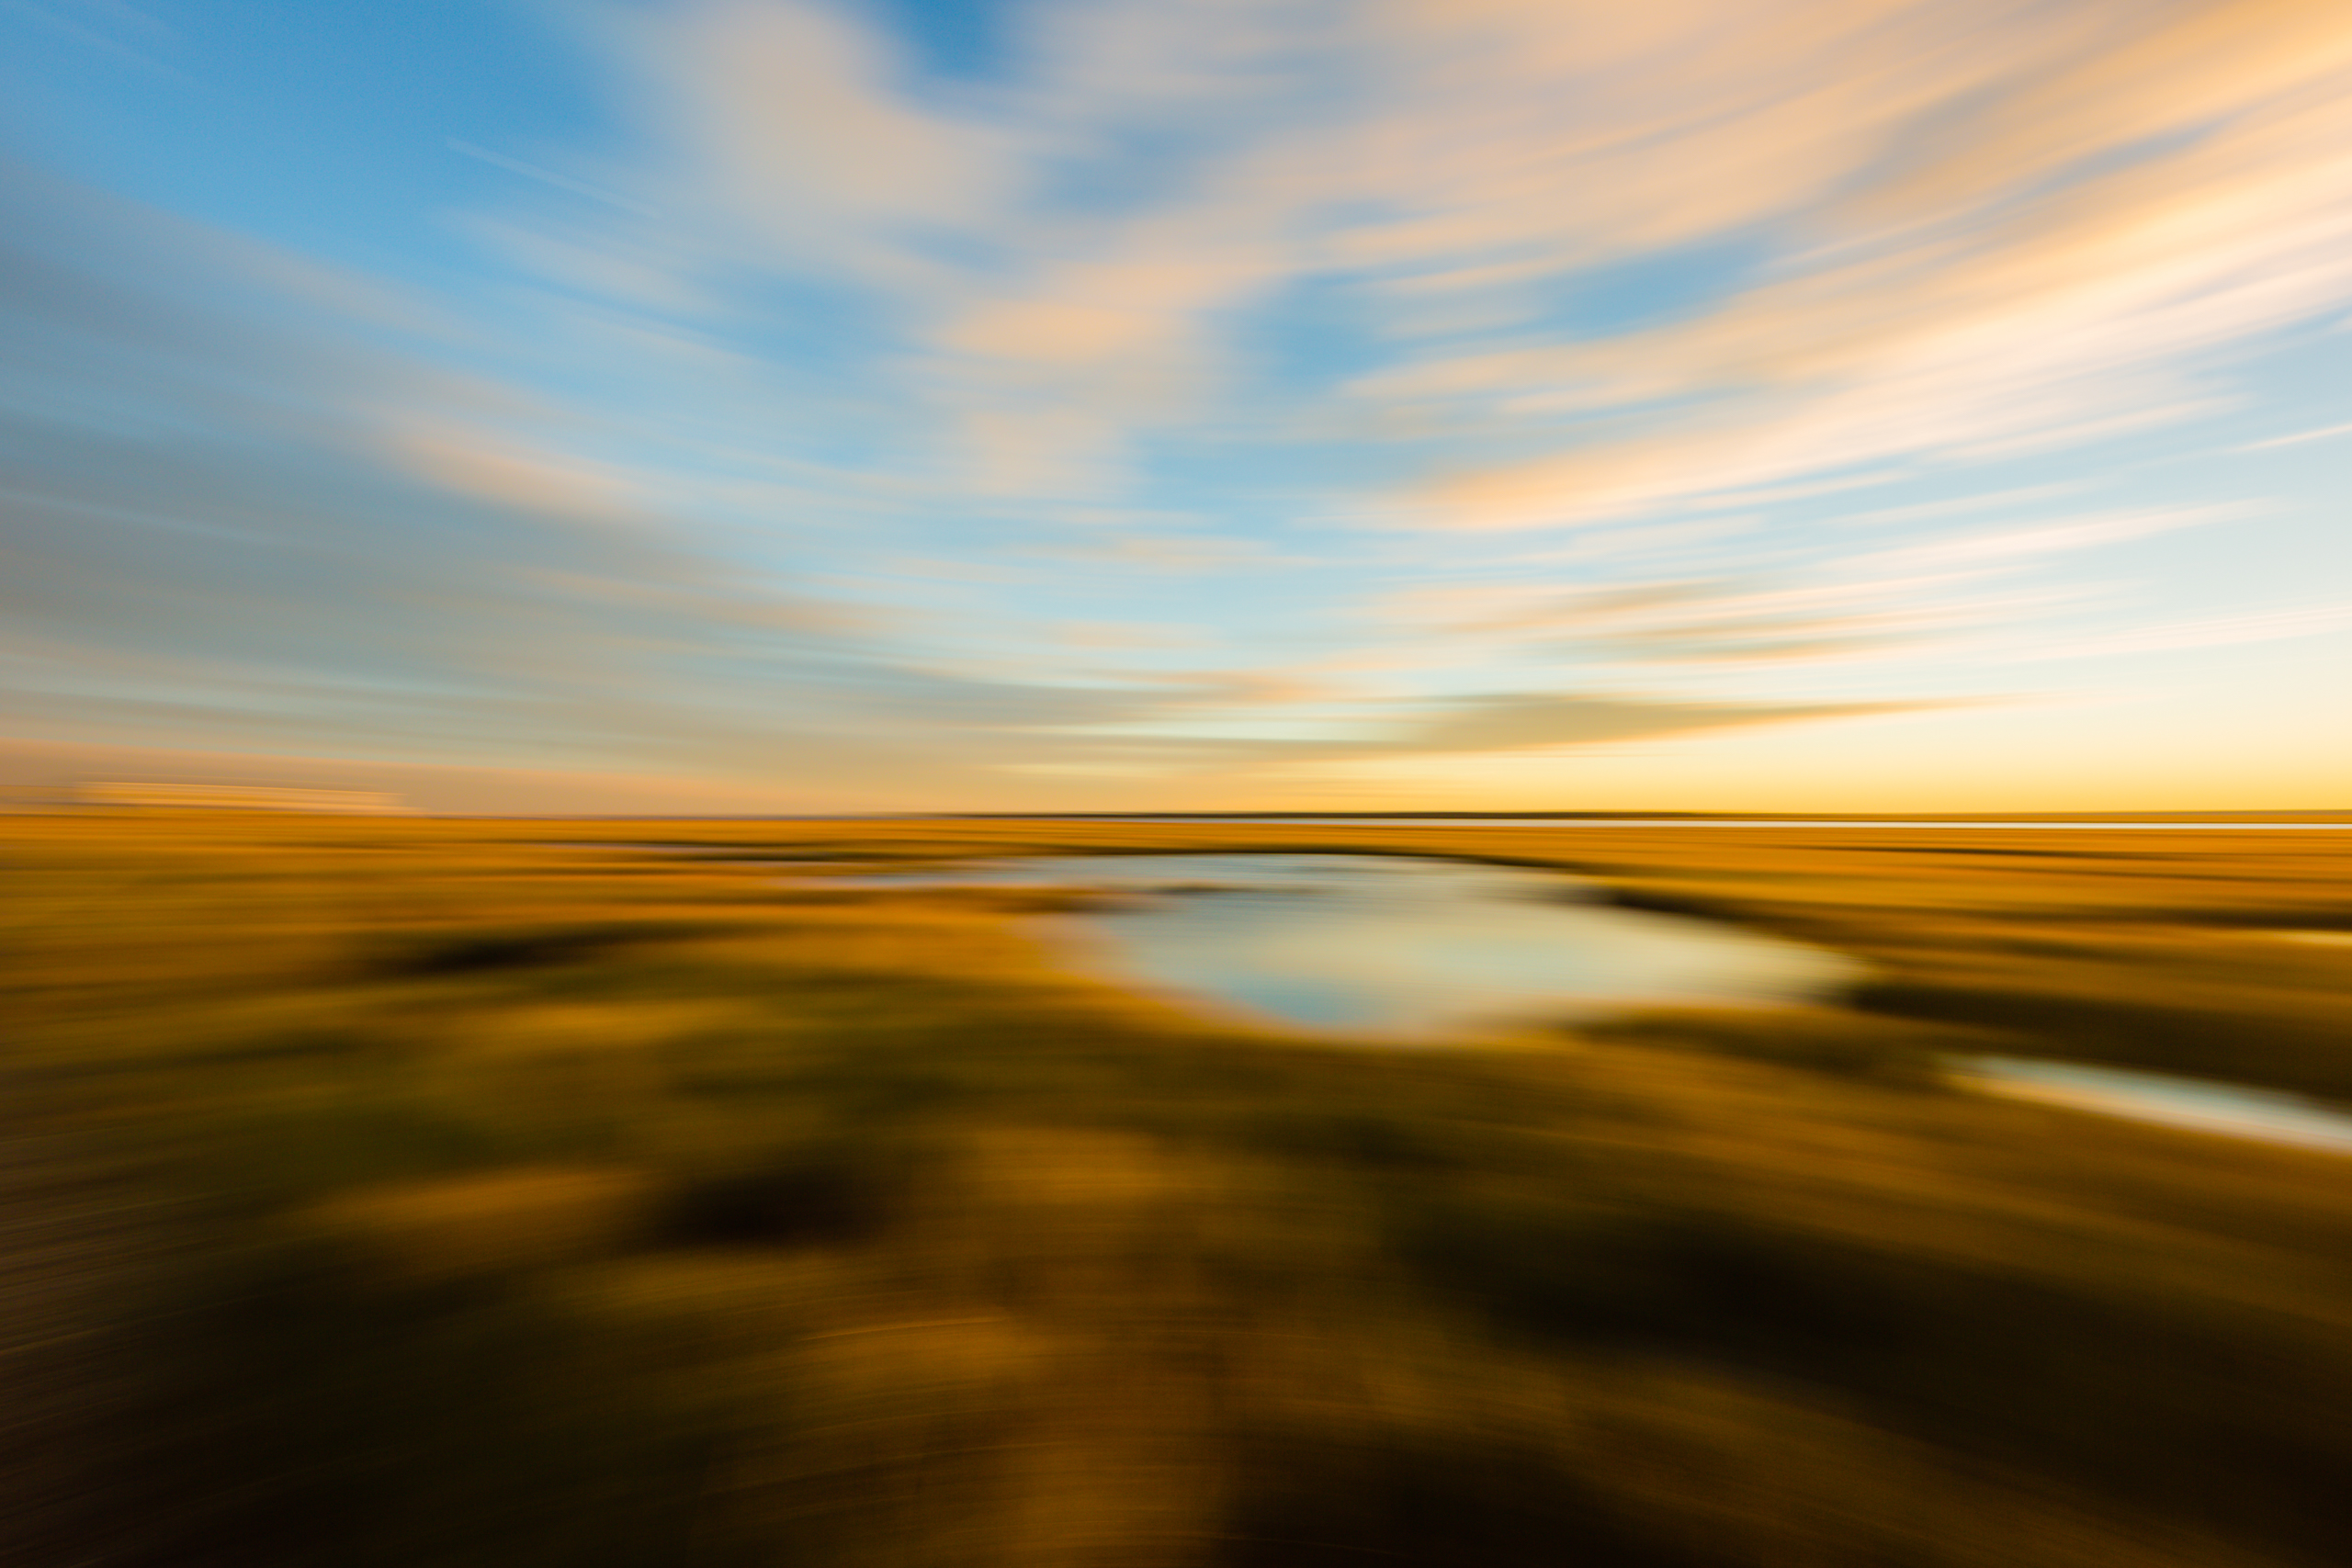 Motion blur photo of marsh at golden hour.